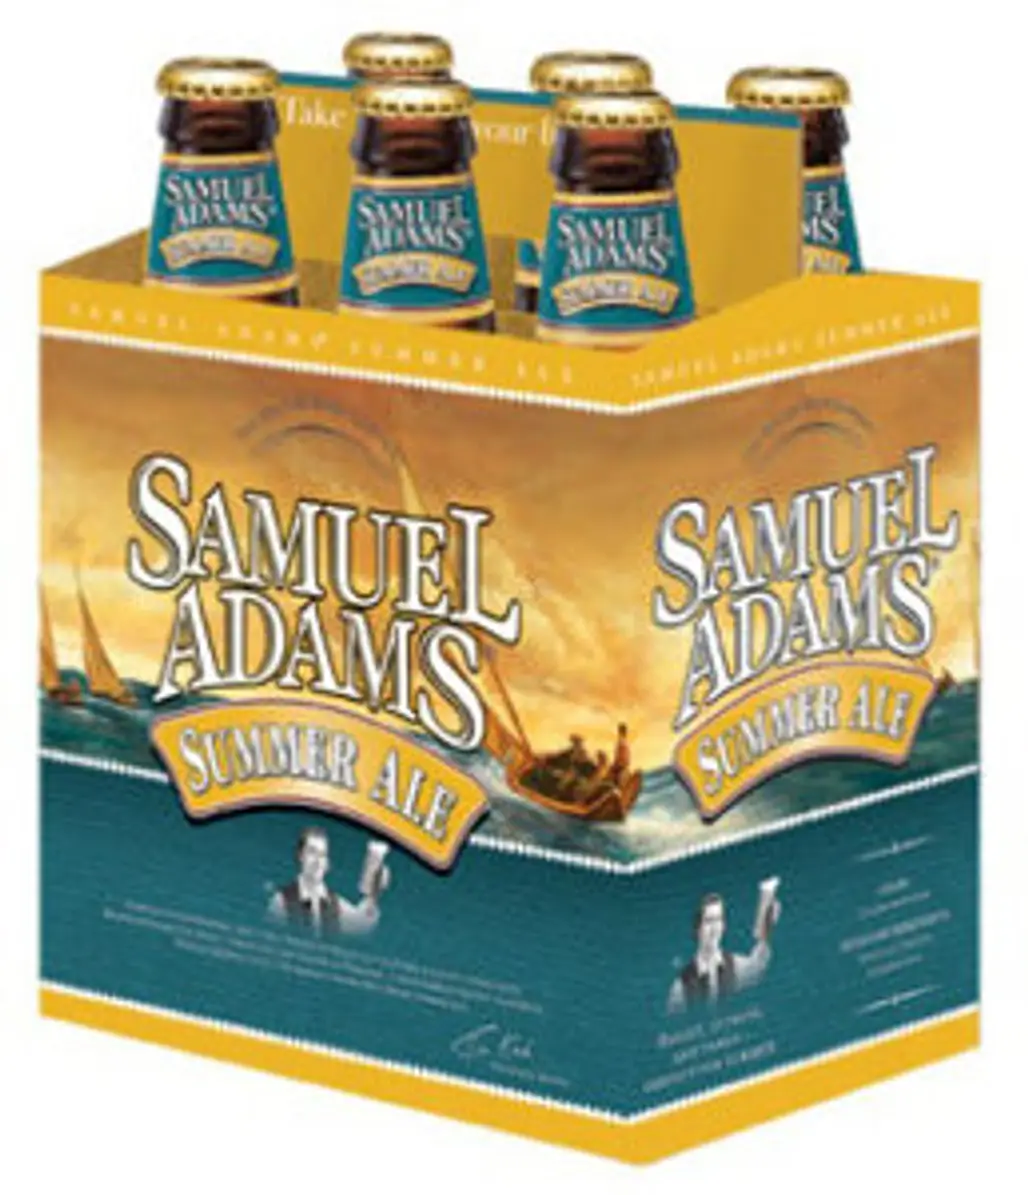 Sam Adams Summer Ale